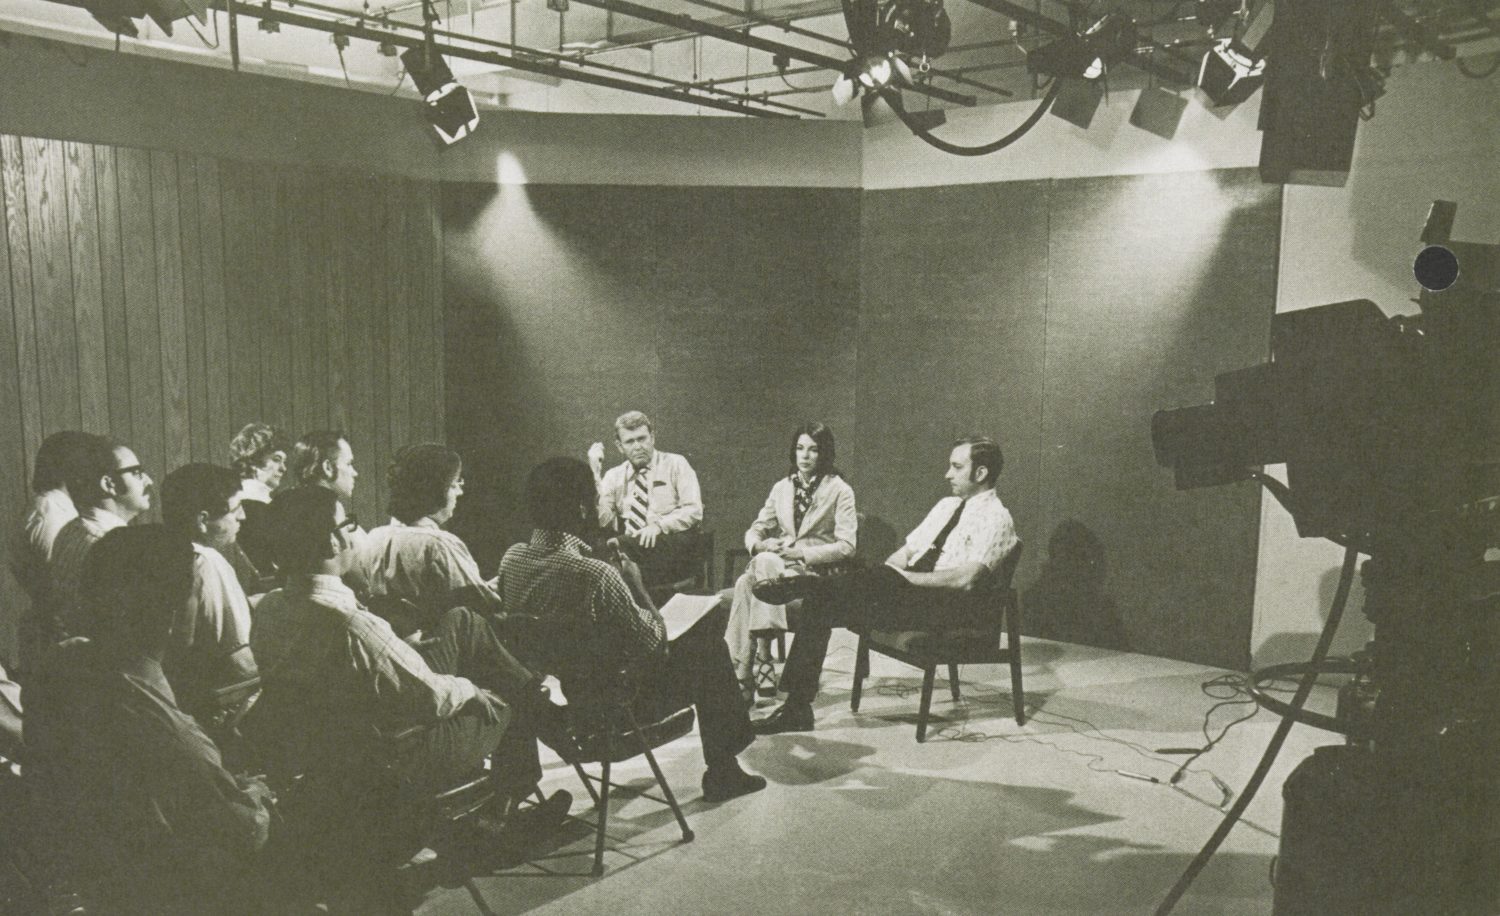 Bill Hewlett, Linda Standley and Paul Ely attending an employee meeting in 1974.